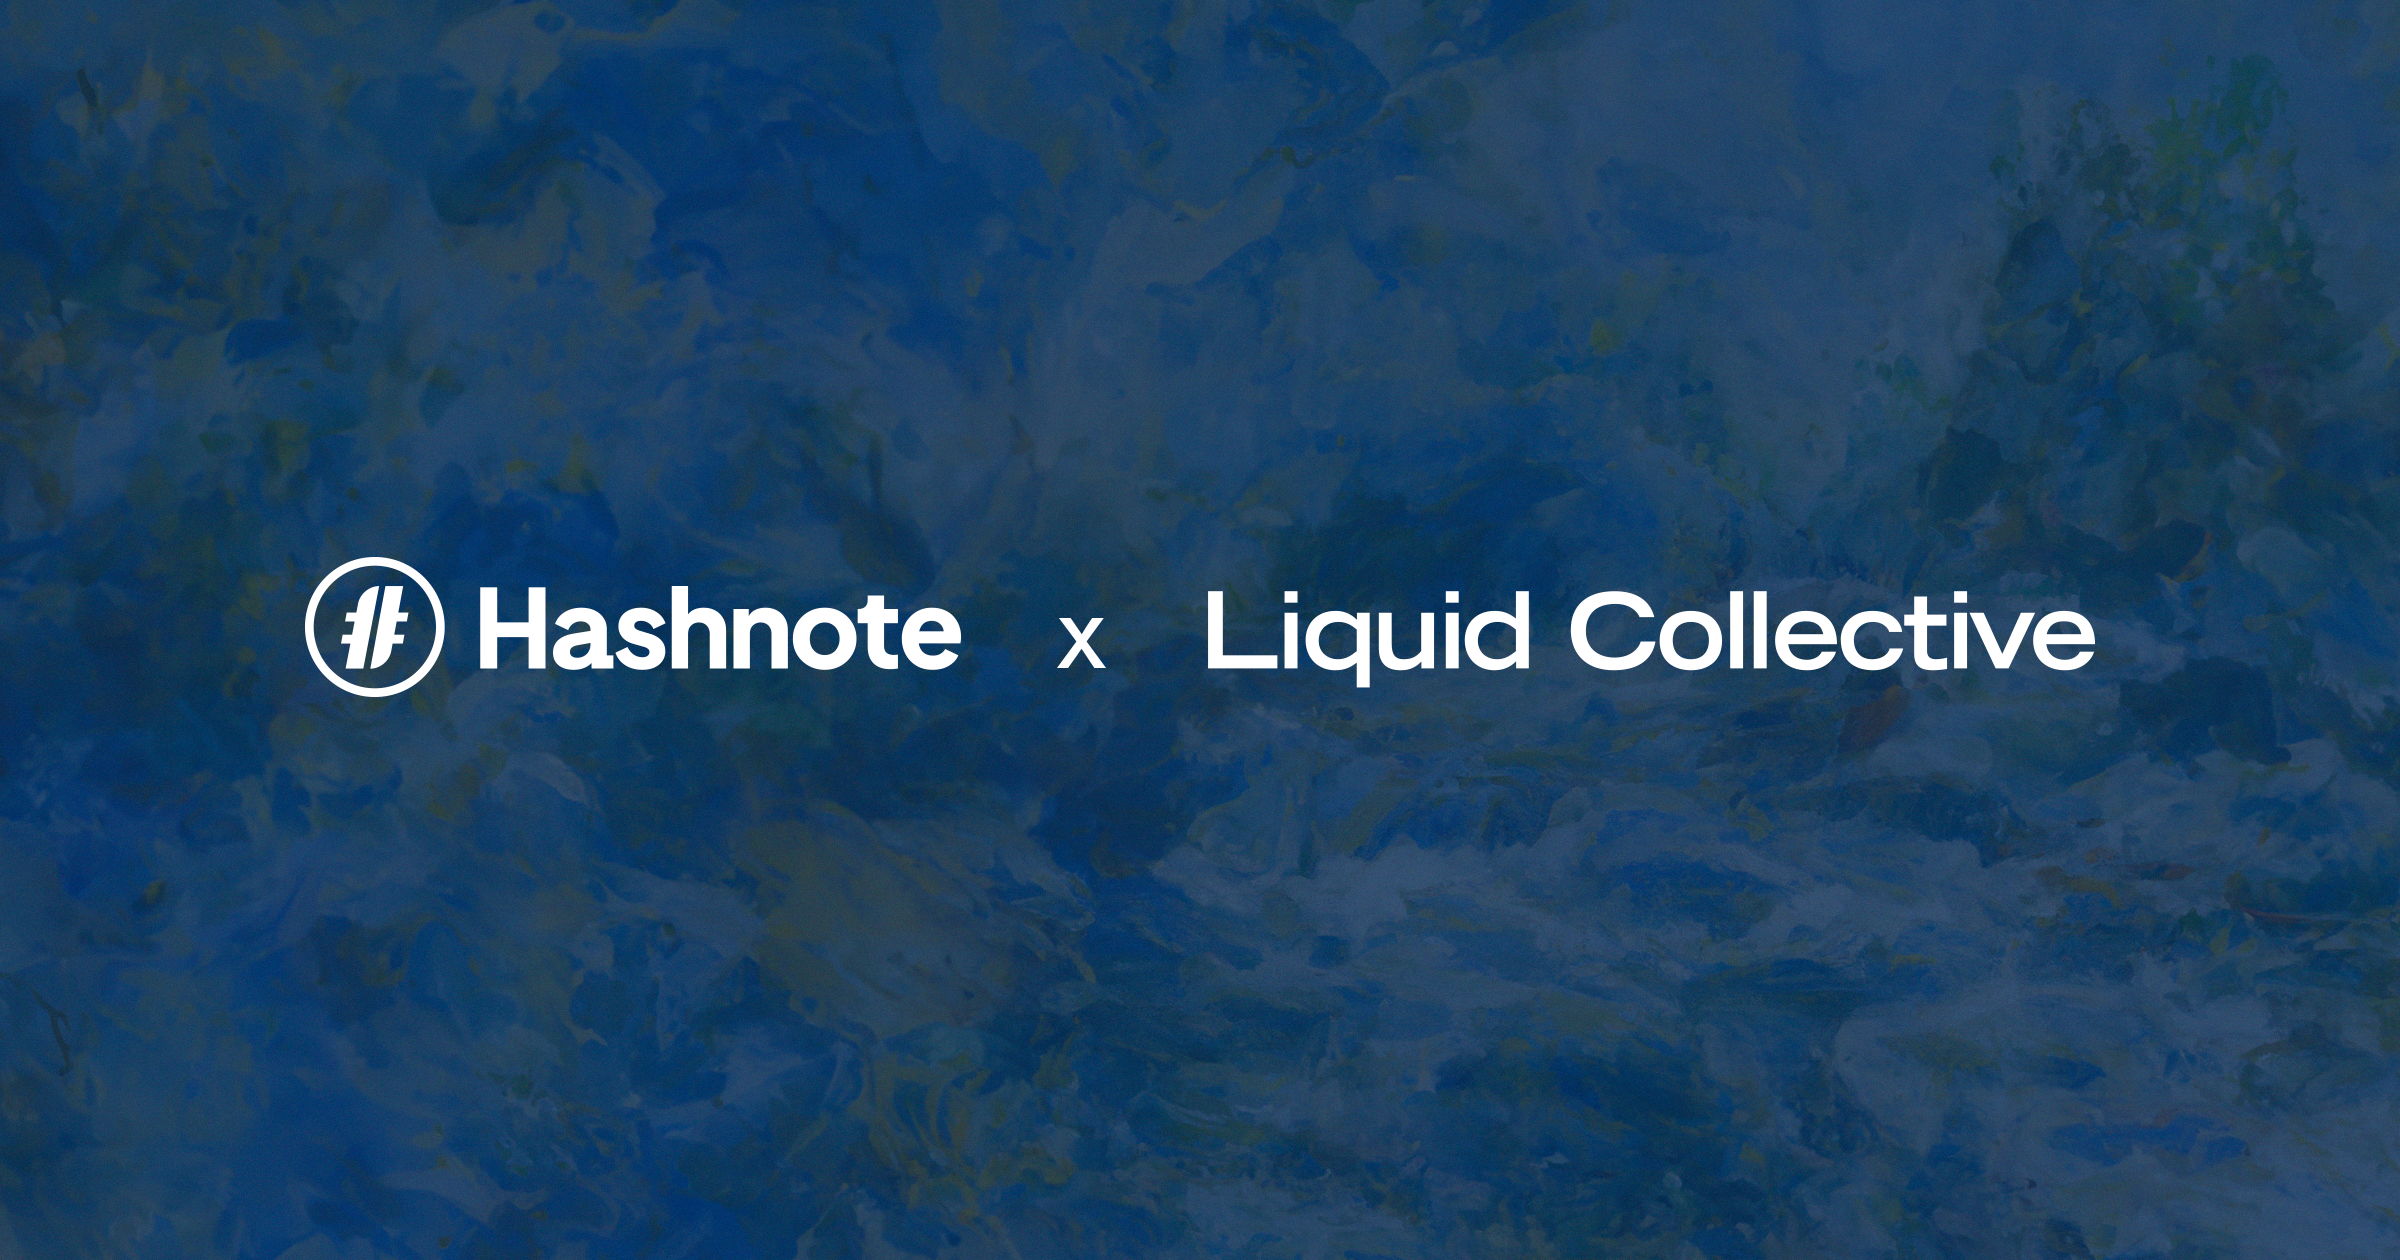 Hashnote Joins Liquid Collective as a Platform, Launching Enterprise-Grade Liquid Staking